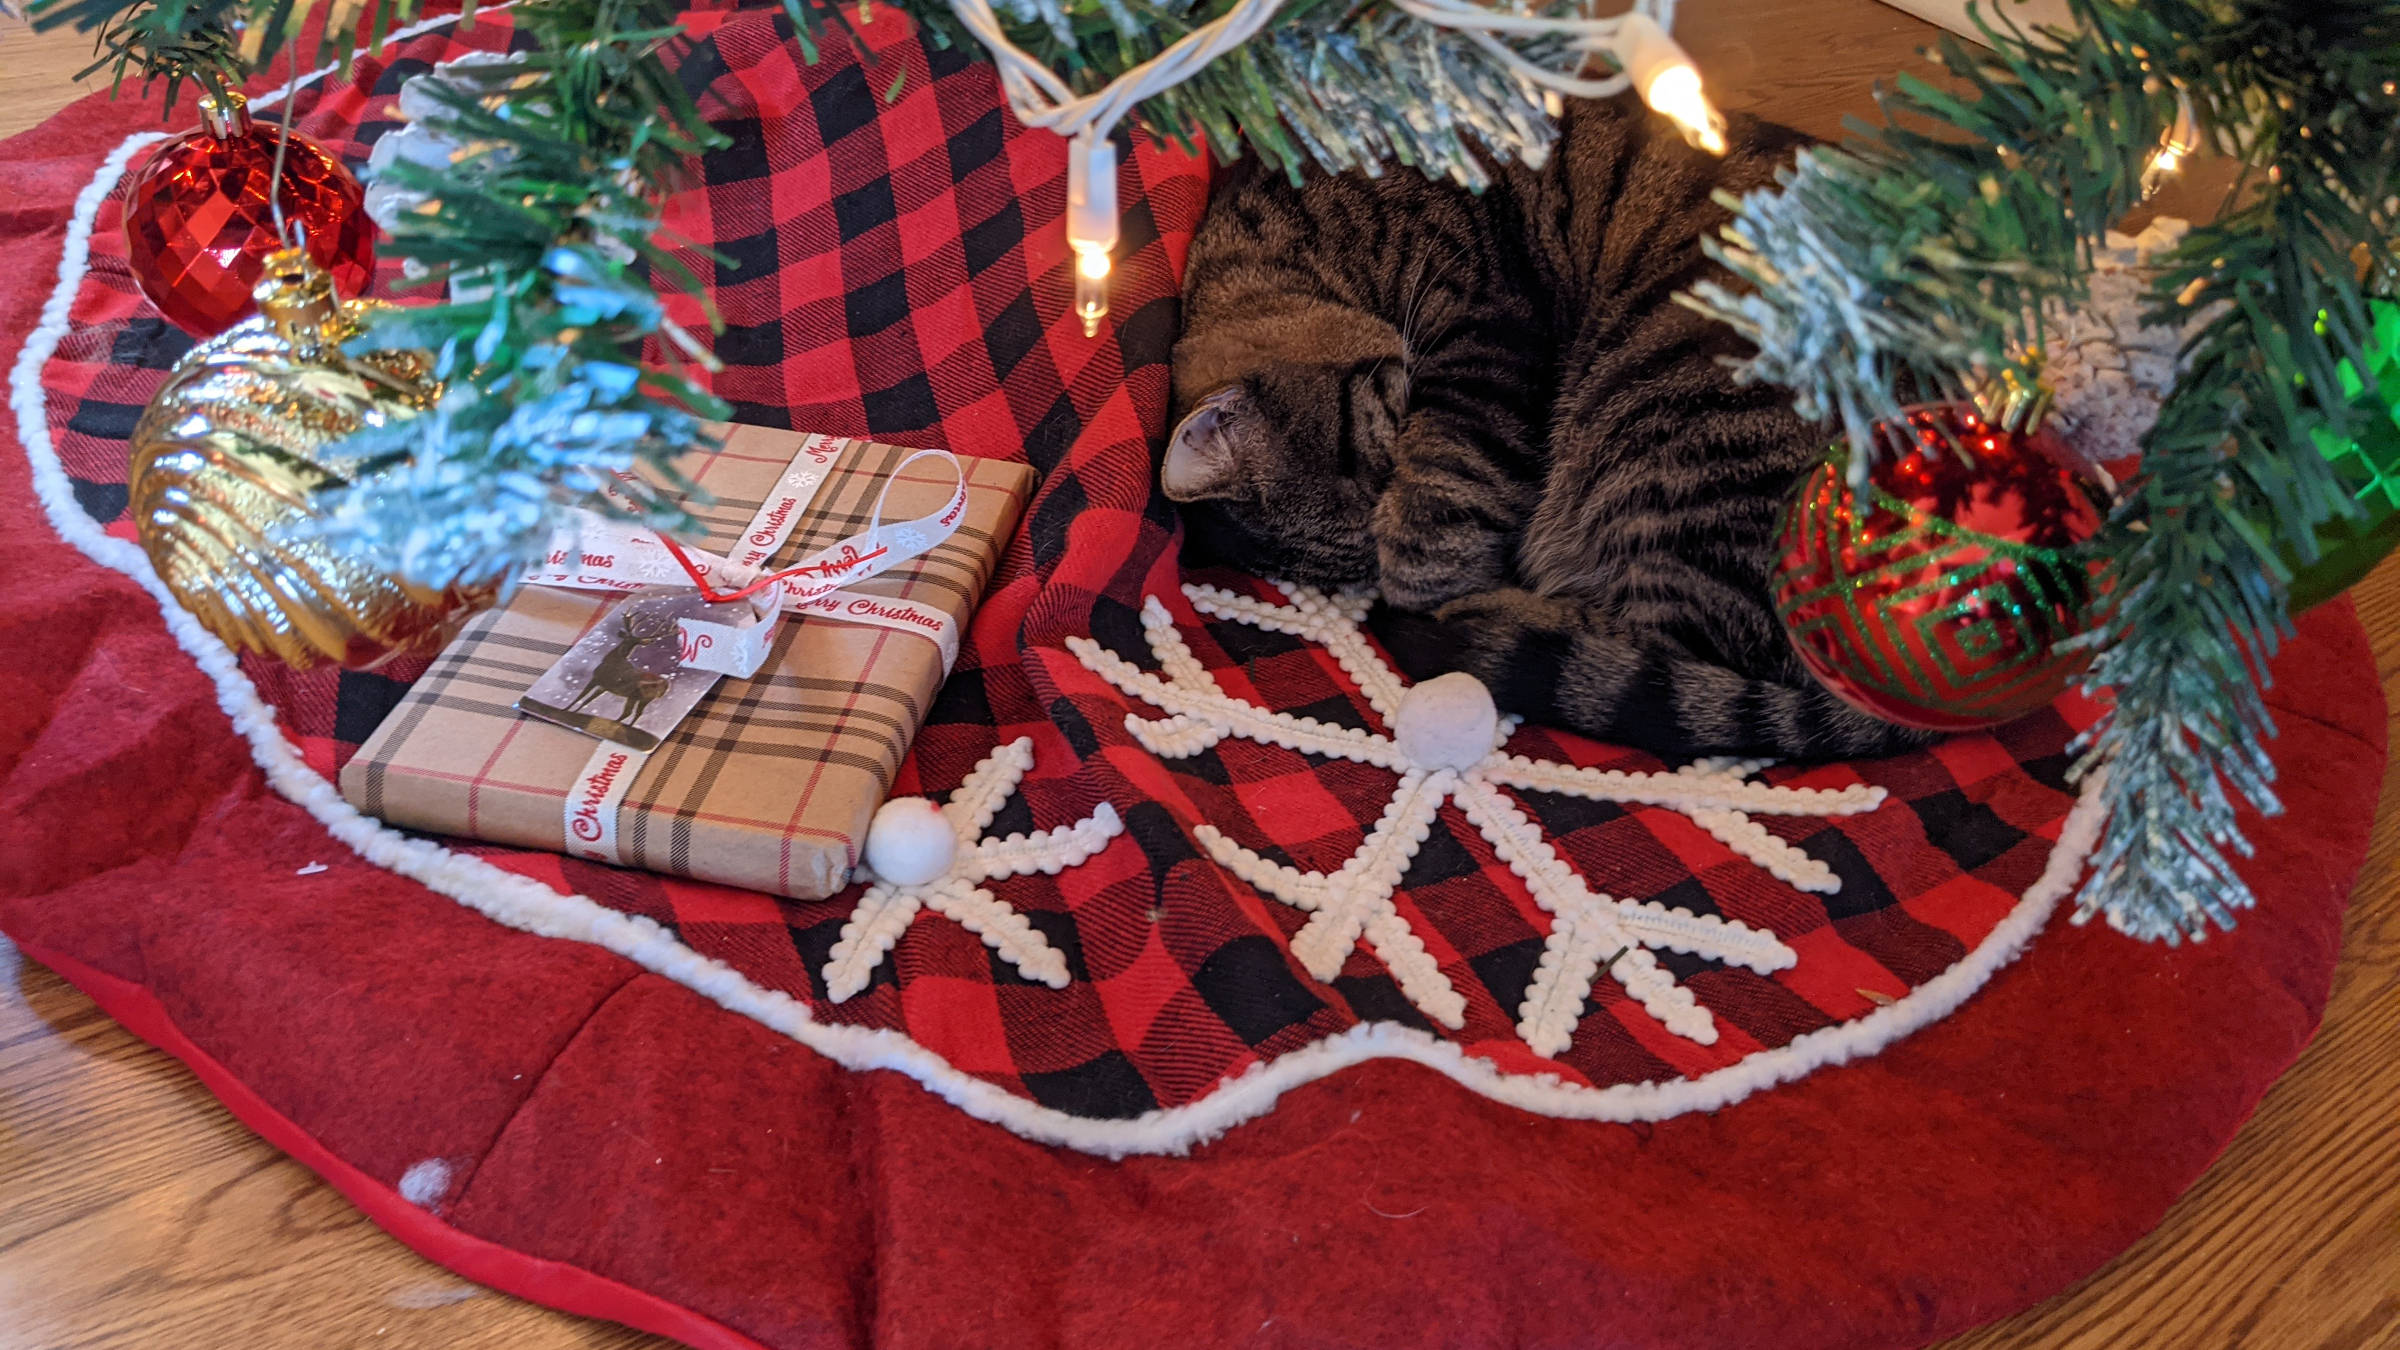 Tabby cat sleeping beneath a Christmas tree.